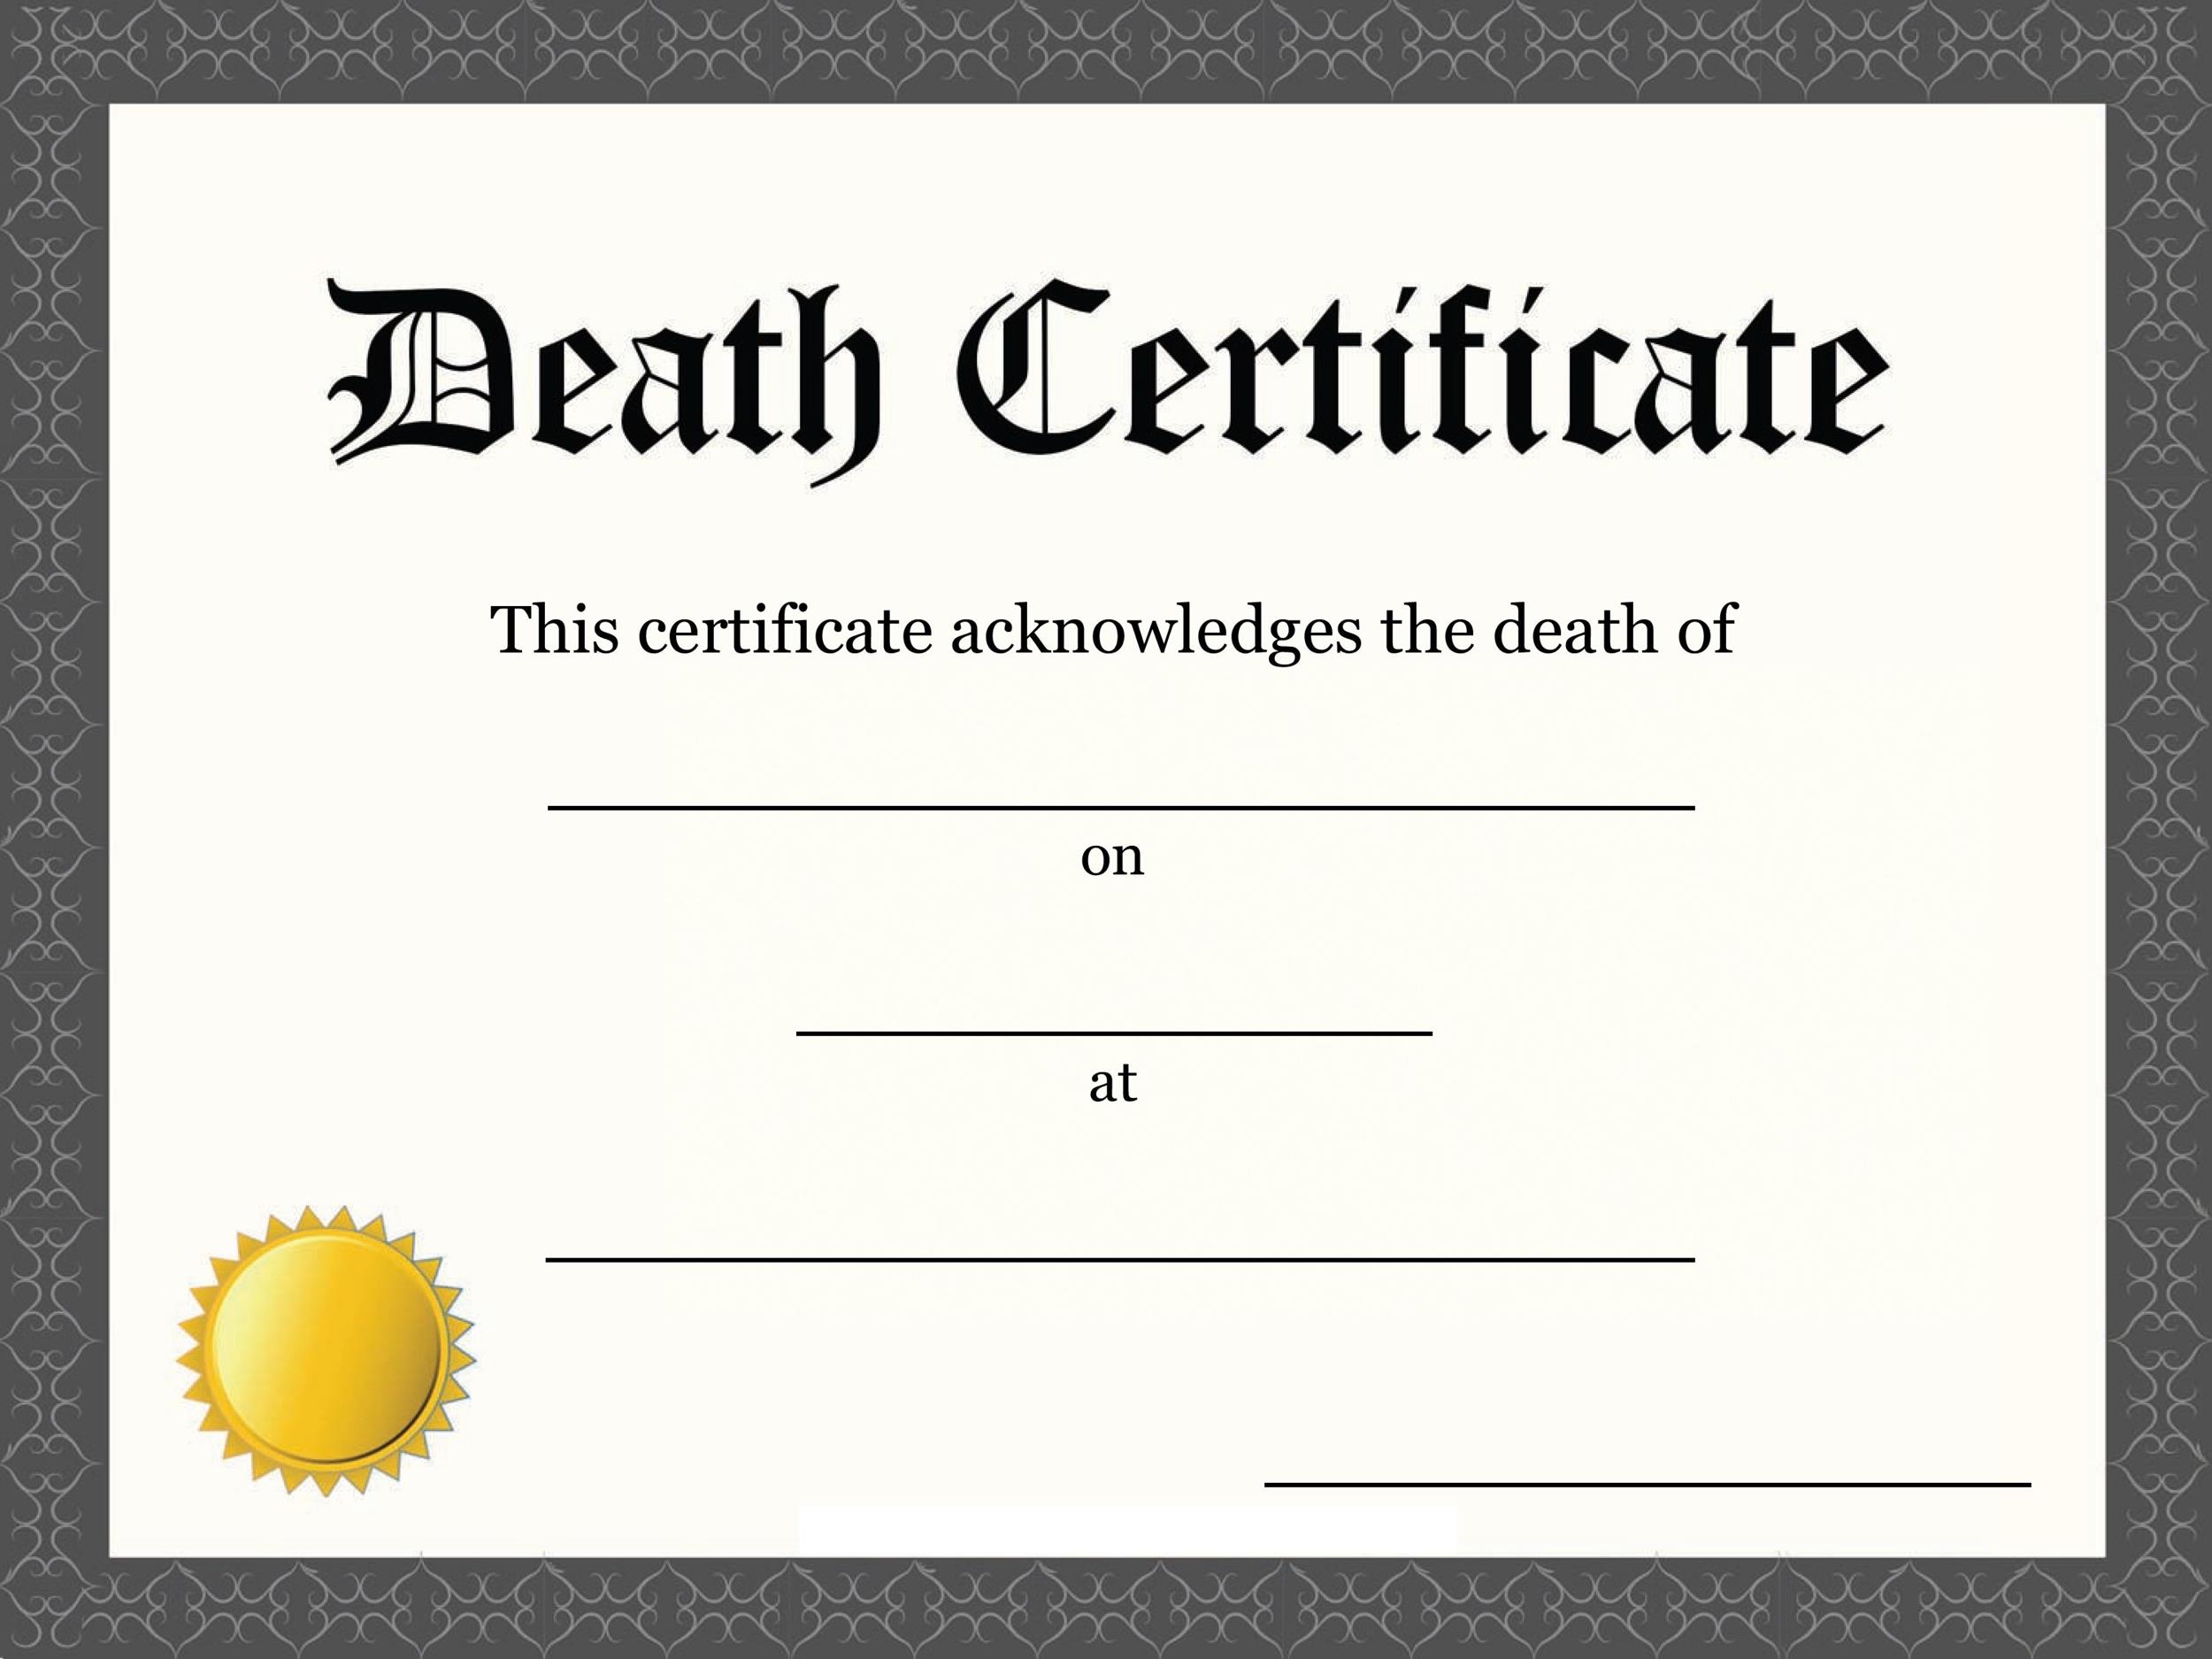 37 Blank Death Certificate Templates 100% FREE ᐅ TemplateLab